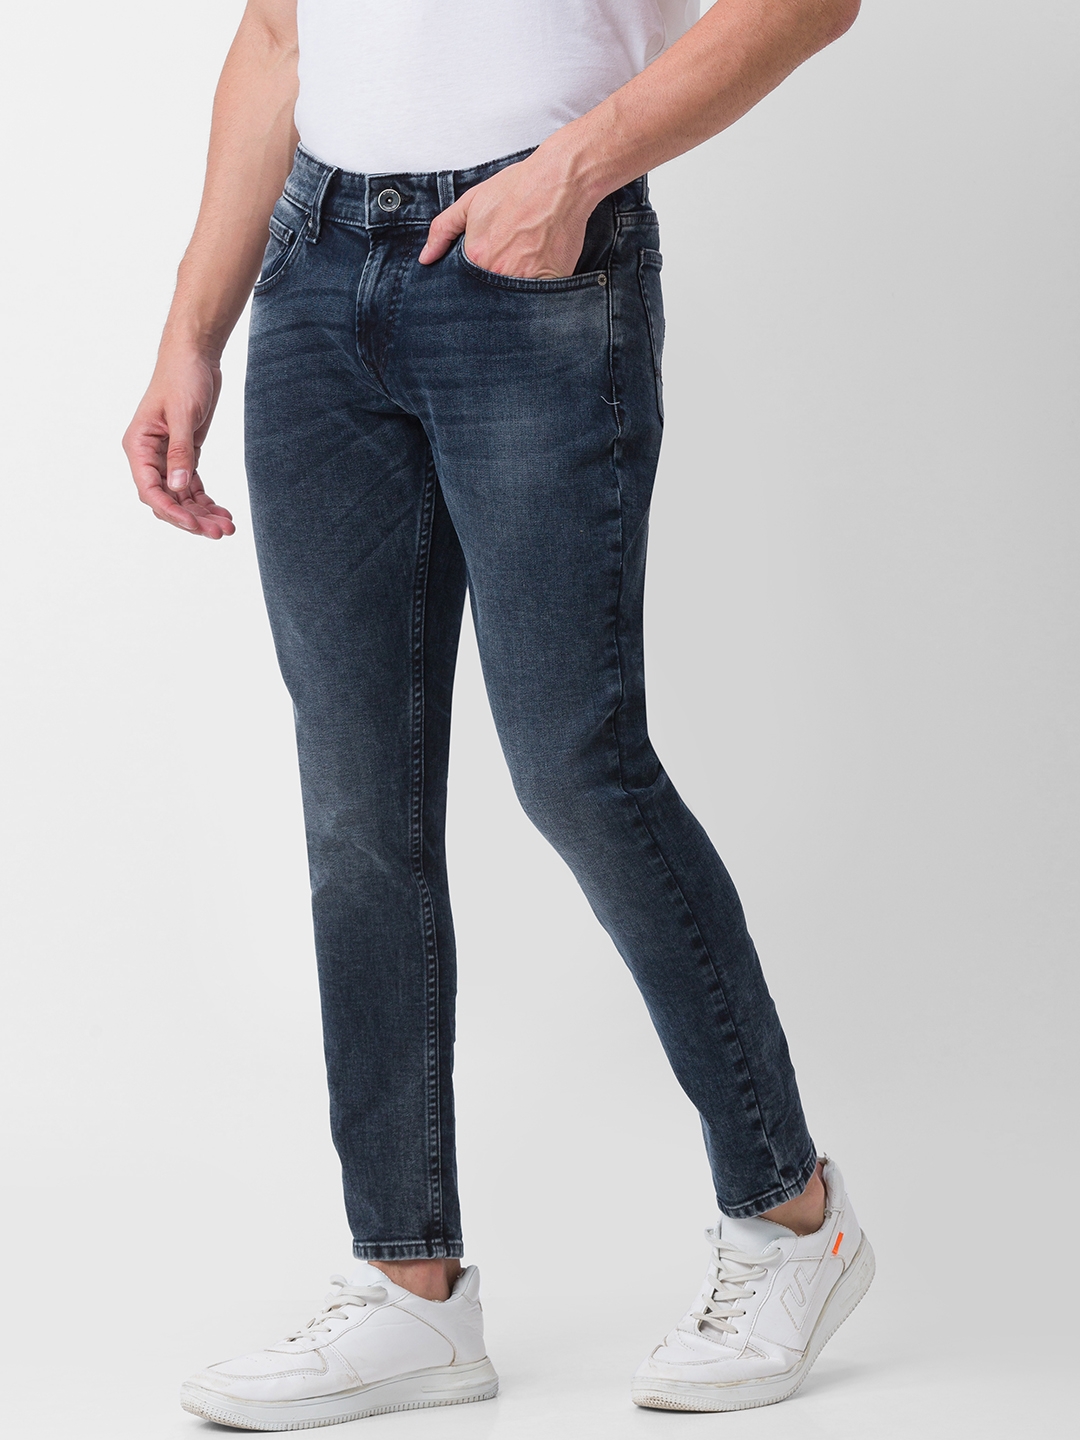 spykar | Men's Black Cotton Solid Slim Jeans 1